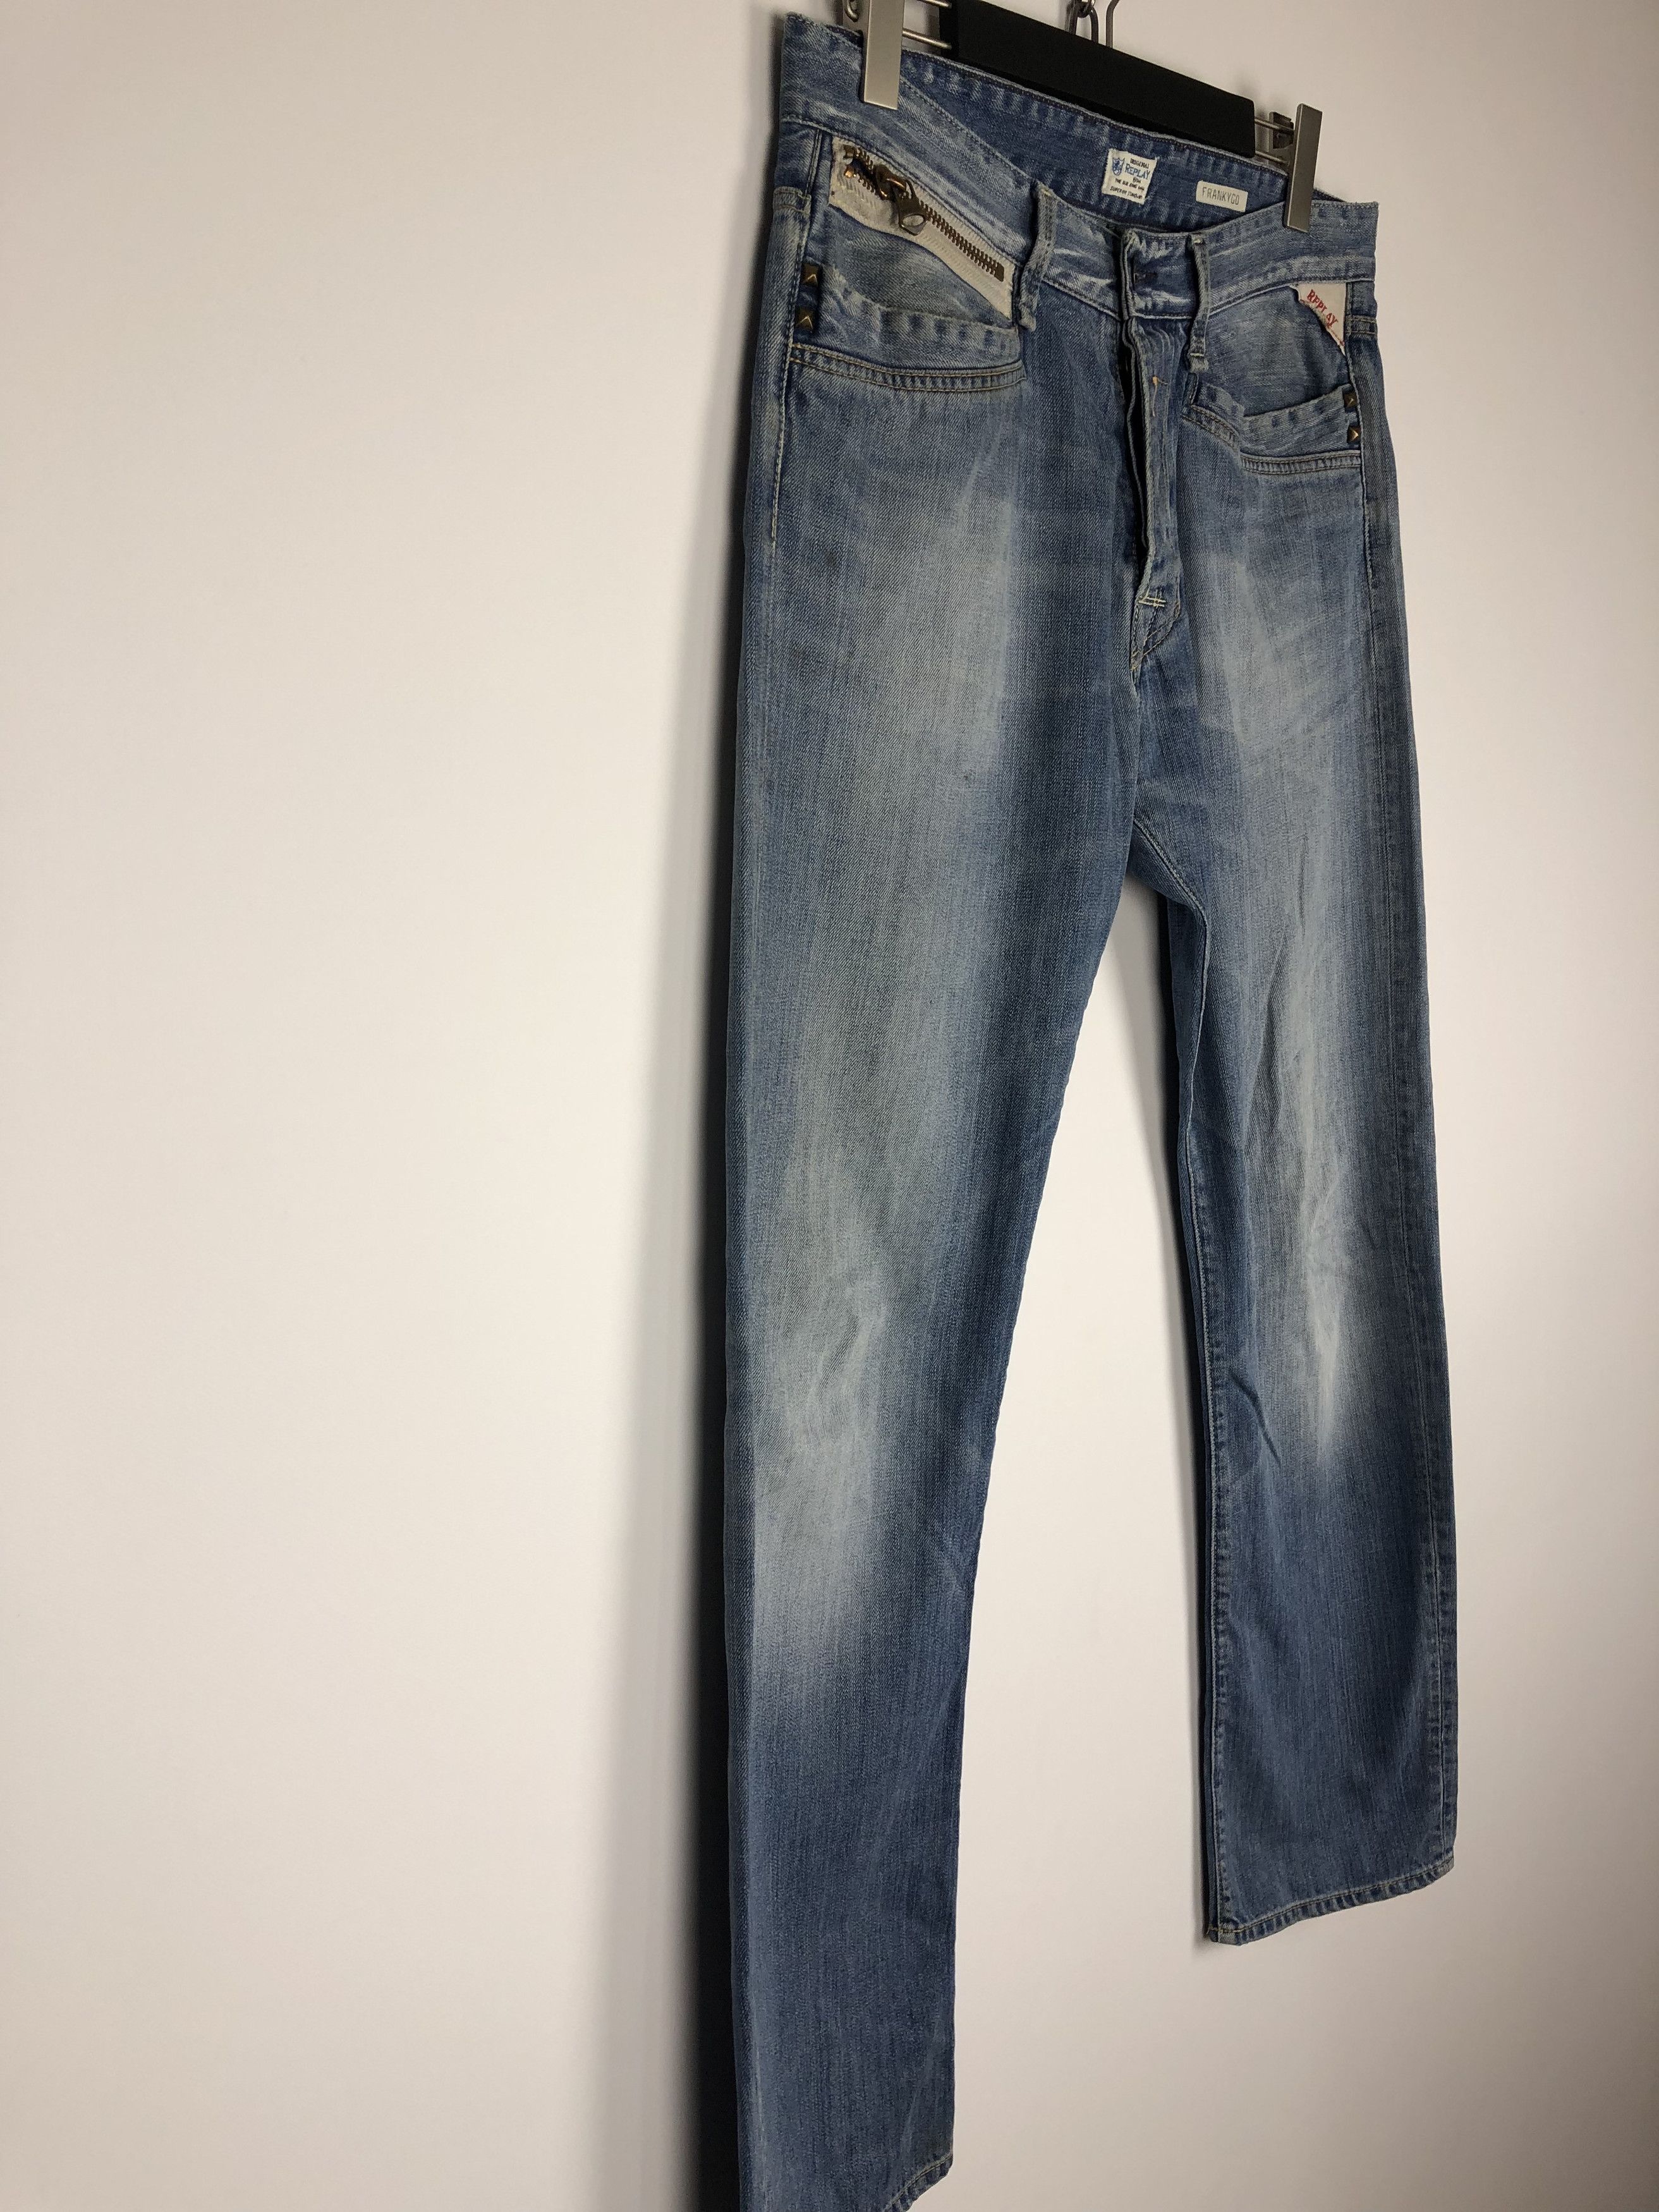 Vintage REPLAY Denim Jeans Pants Franky Vintage Trousers size 32x30 Size US 32 / EU 48 - 5 Thumbnail